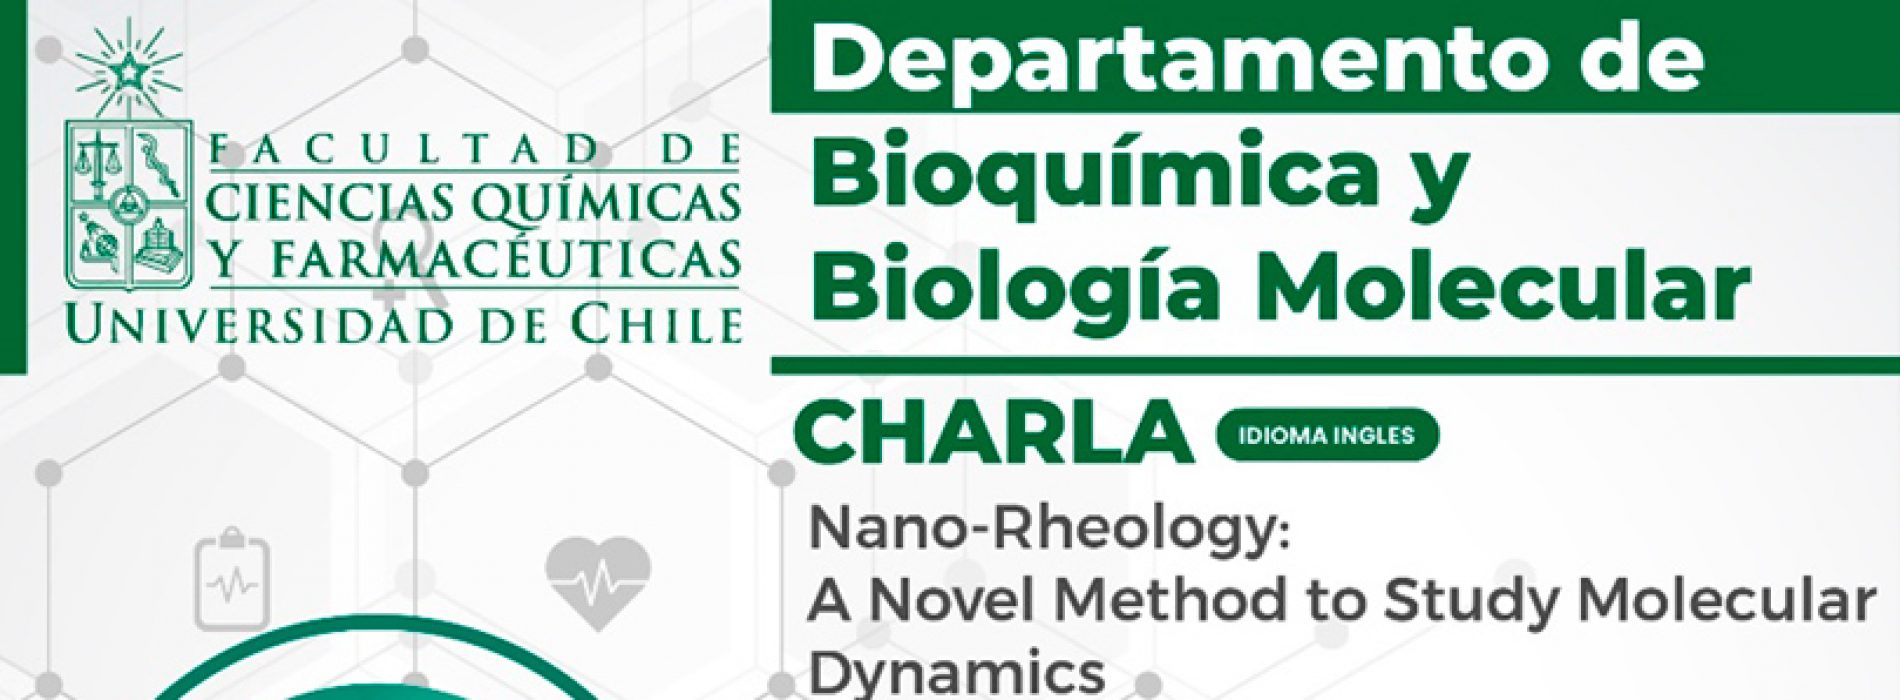 Charla: Nano-Rheology: a novel method to study molecular dynamics